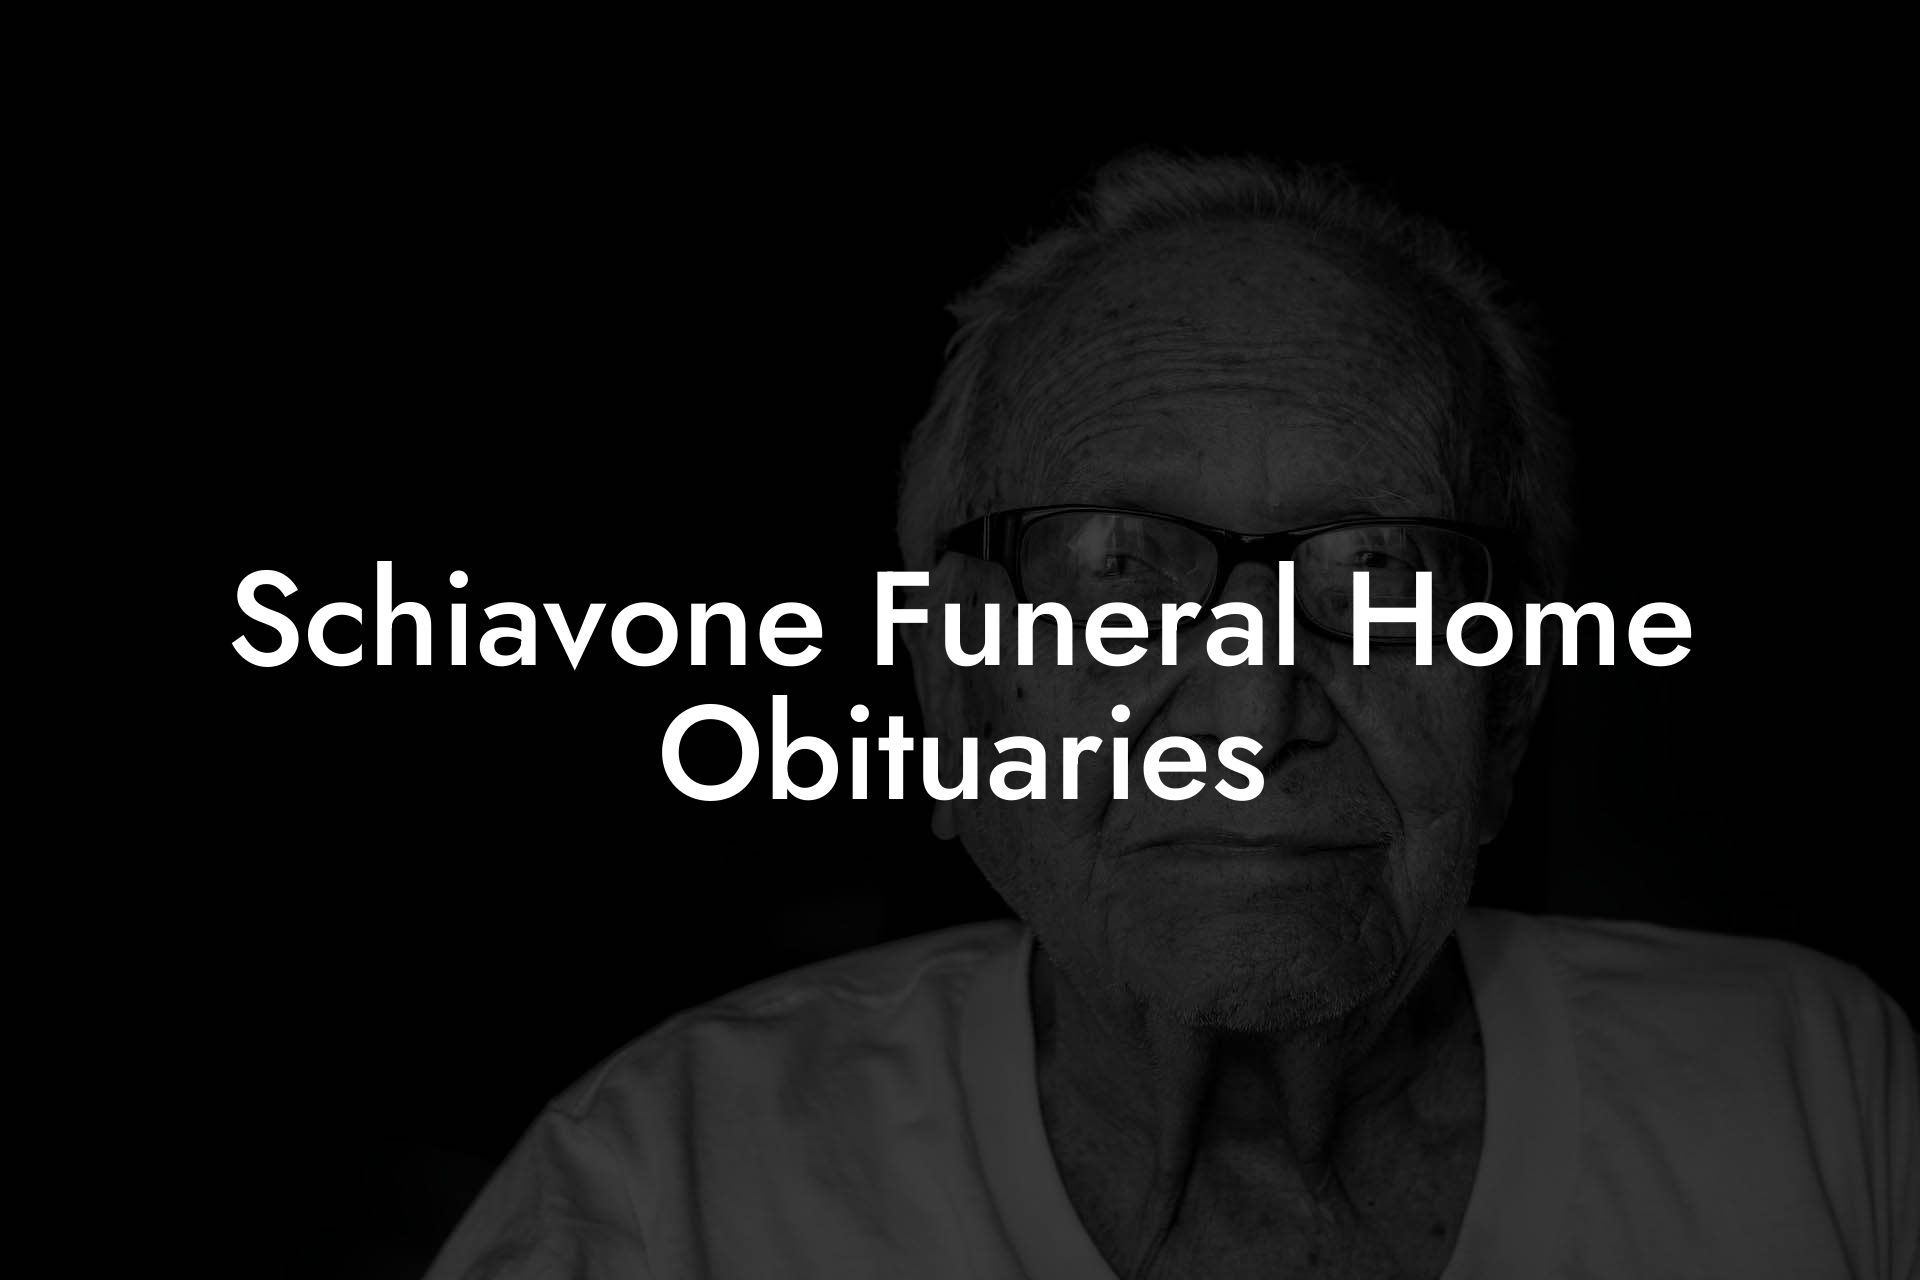 Schiavone Funeral Home Obituaries